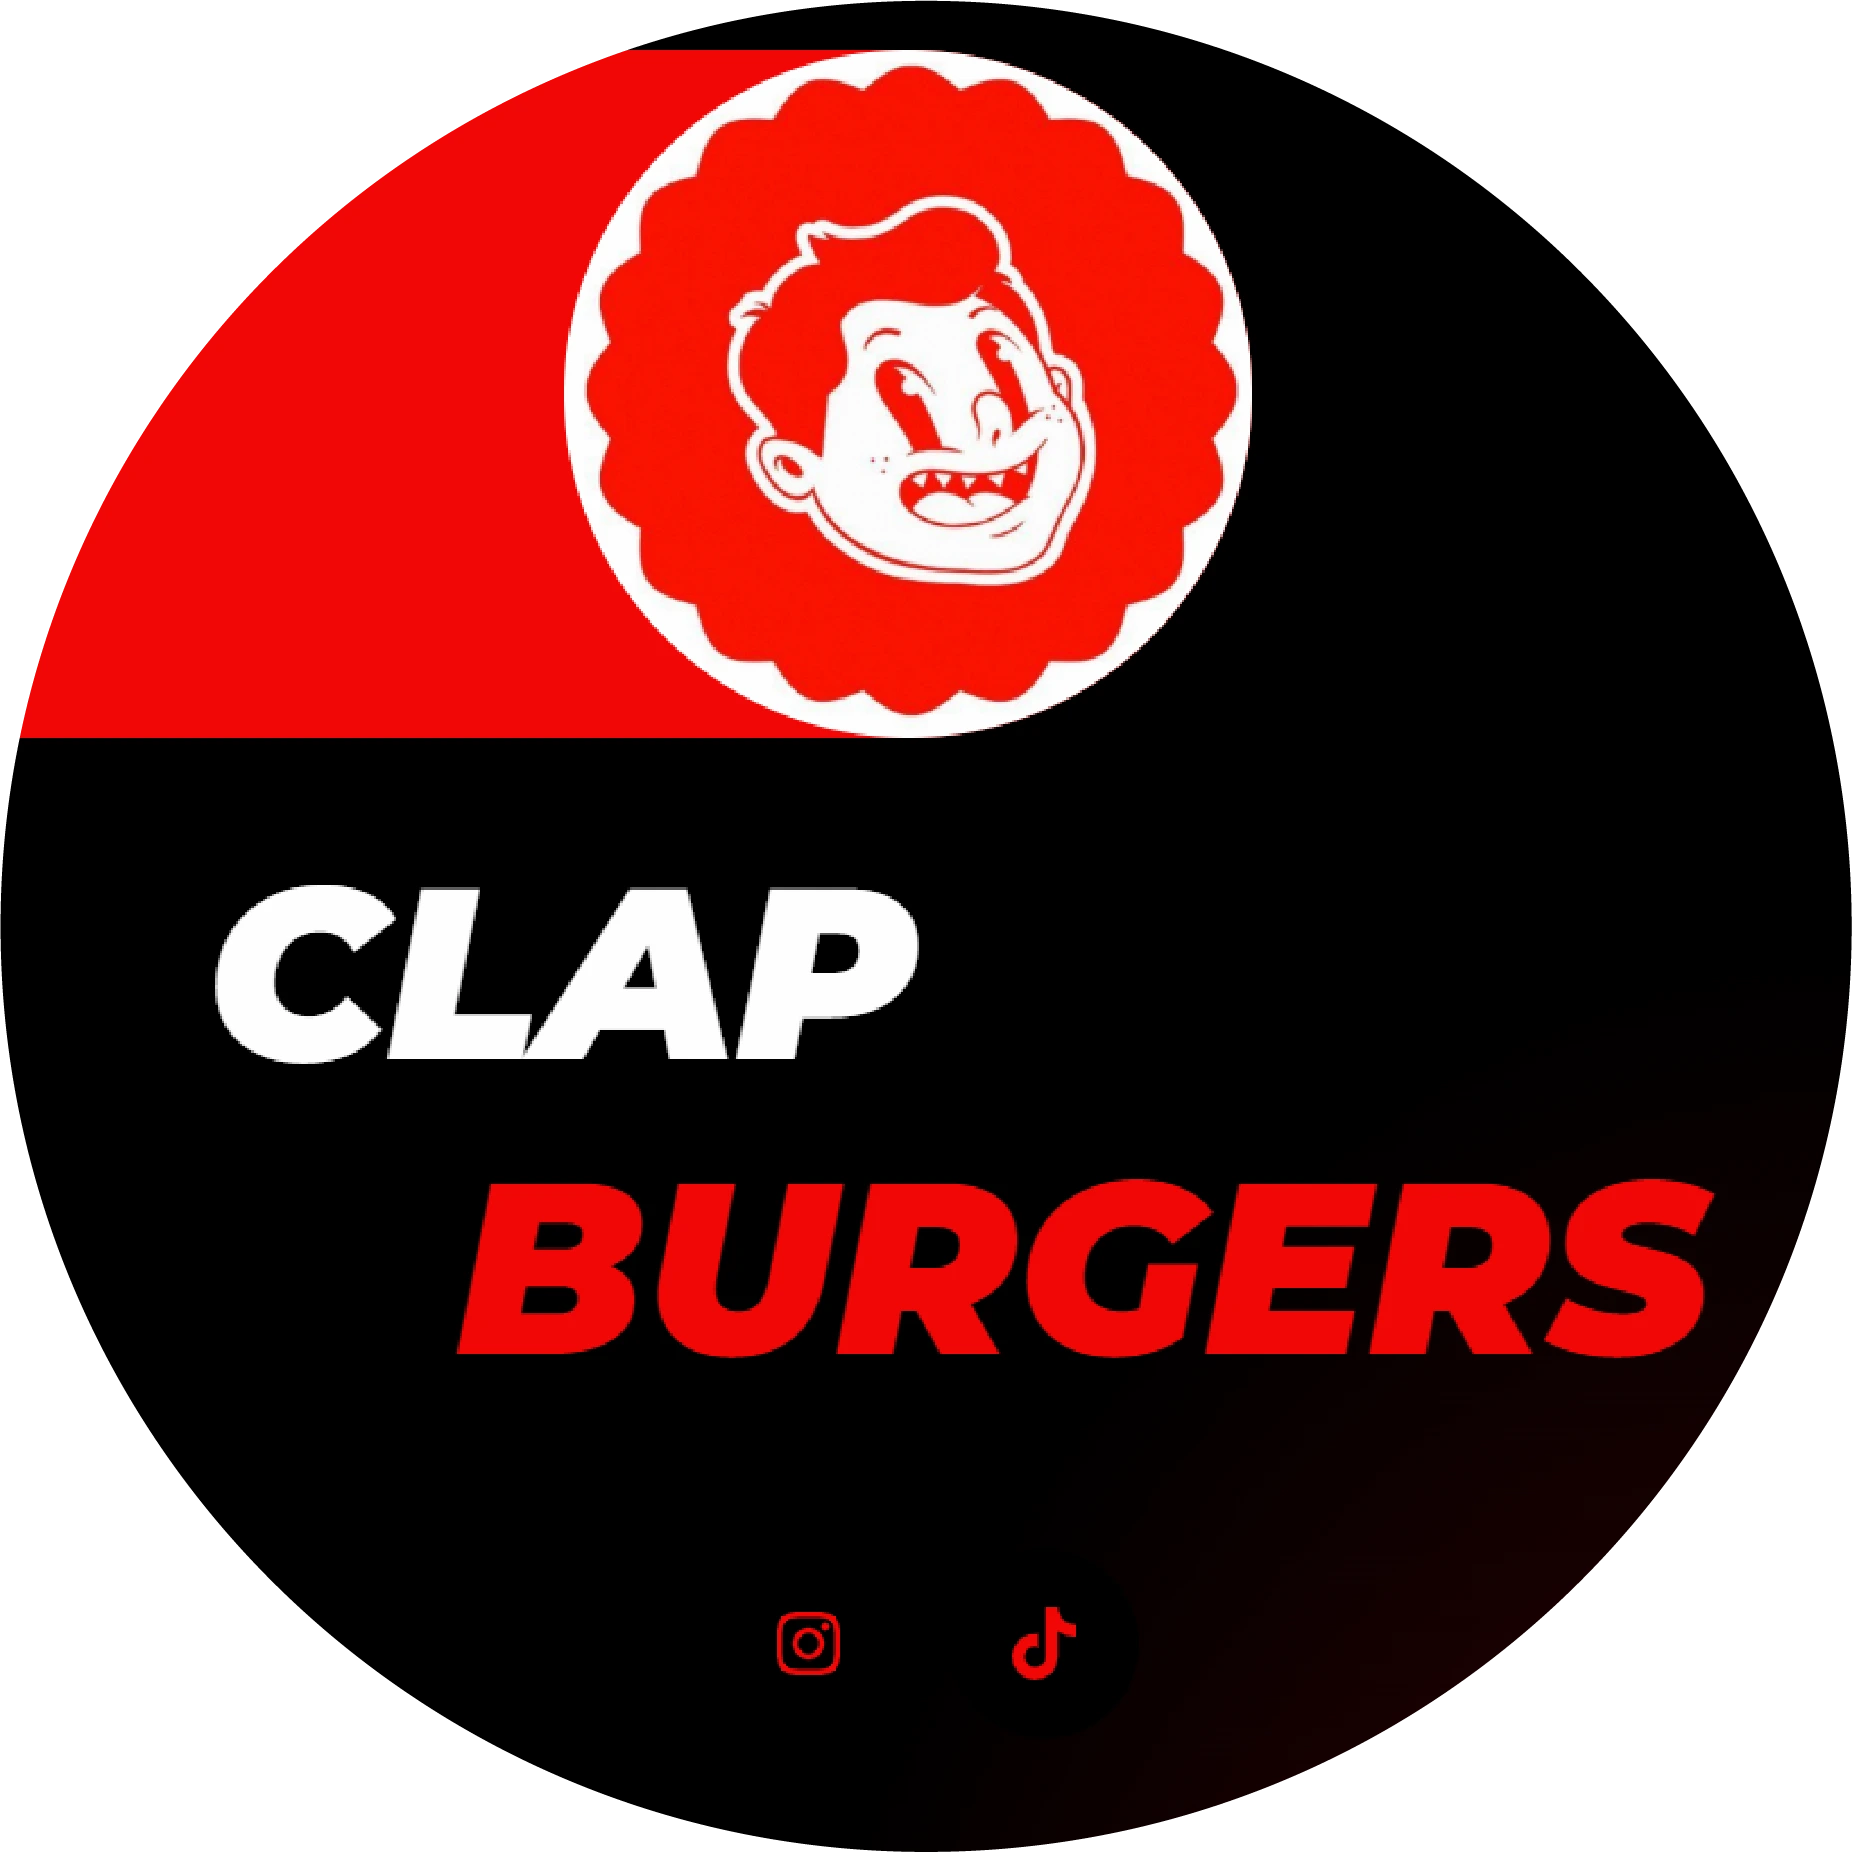 kb my keybe clap burgers